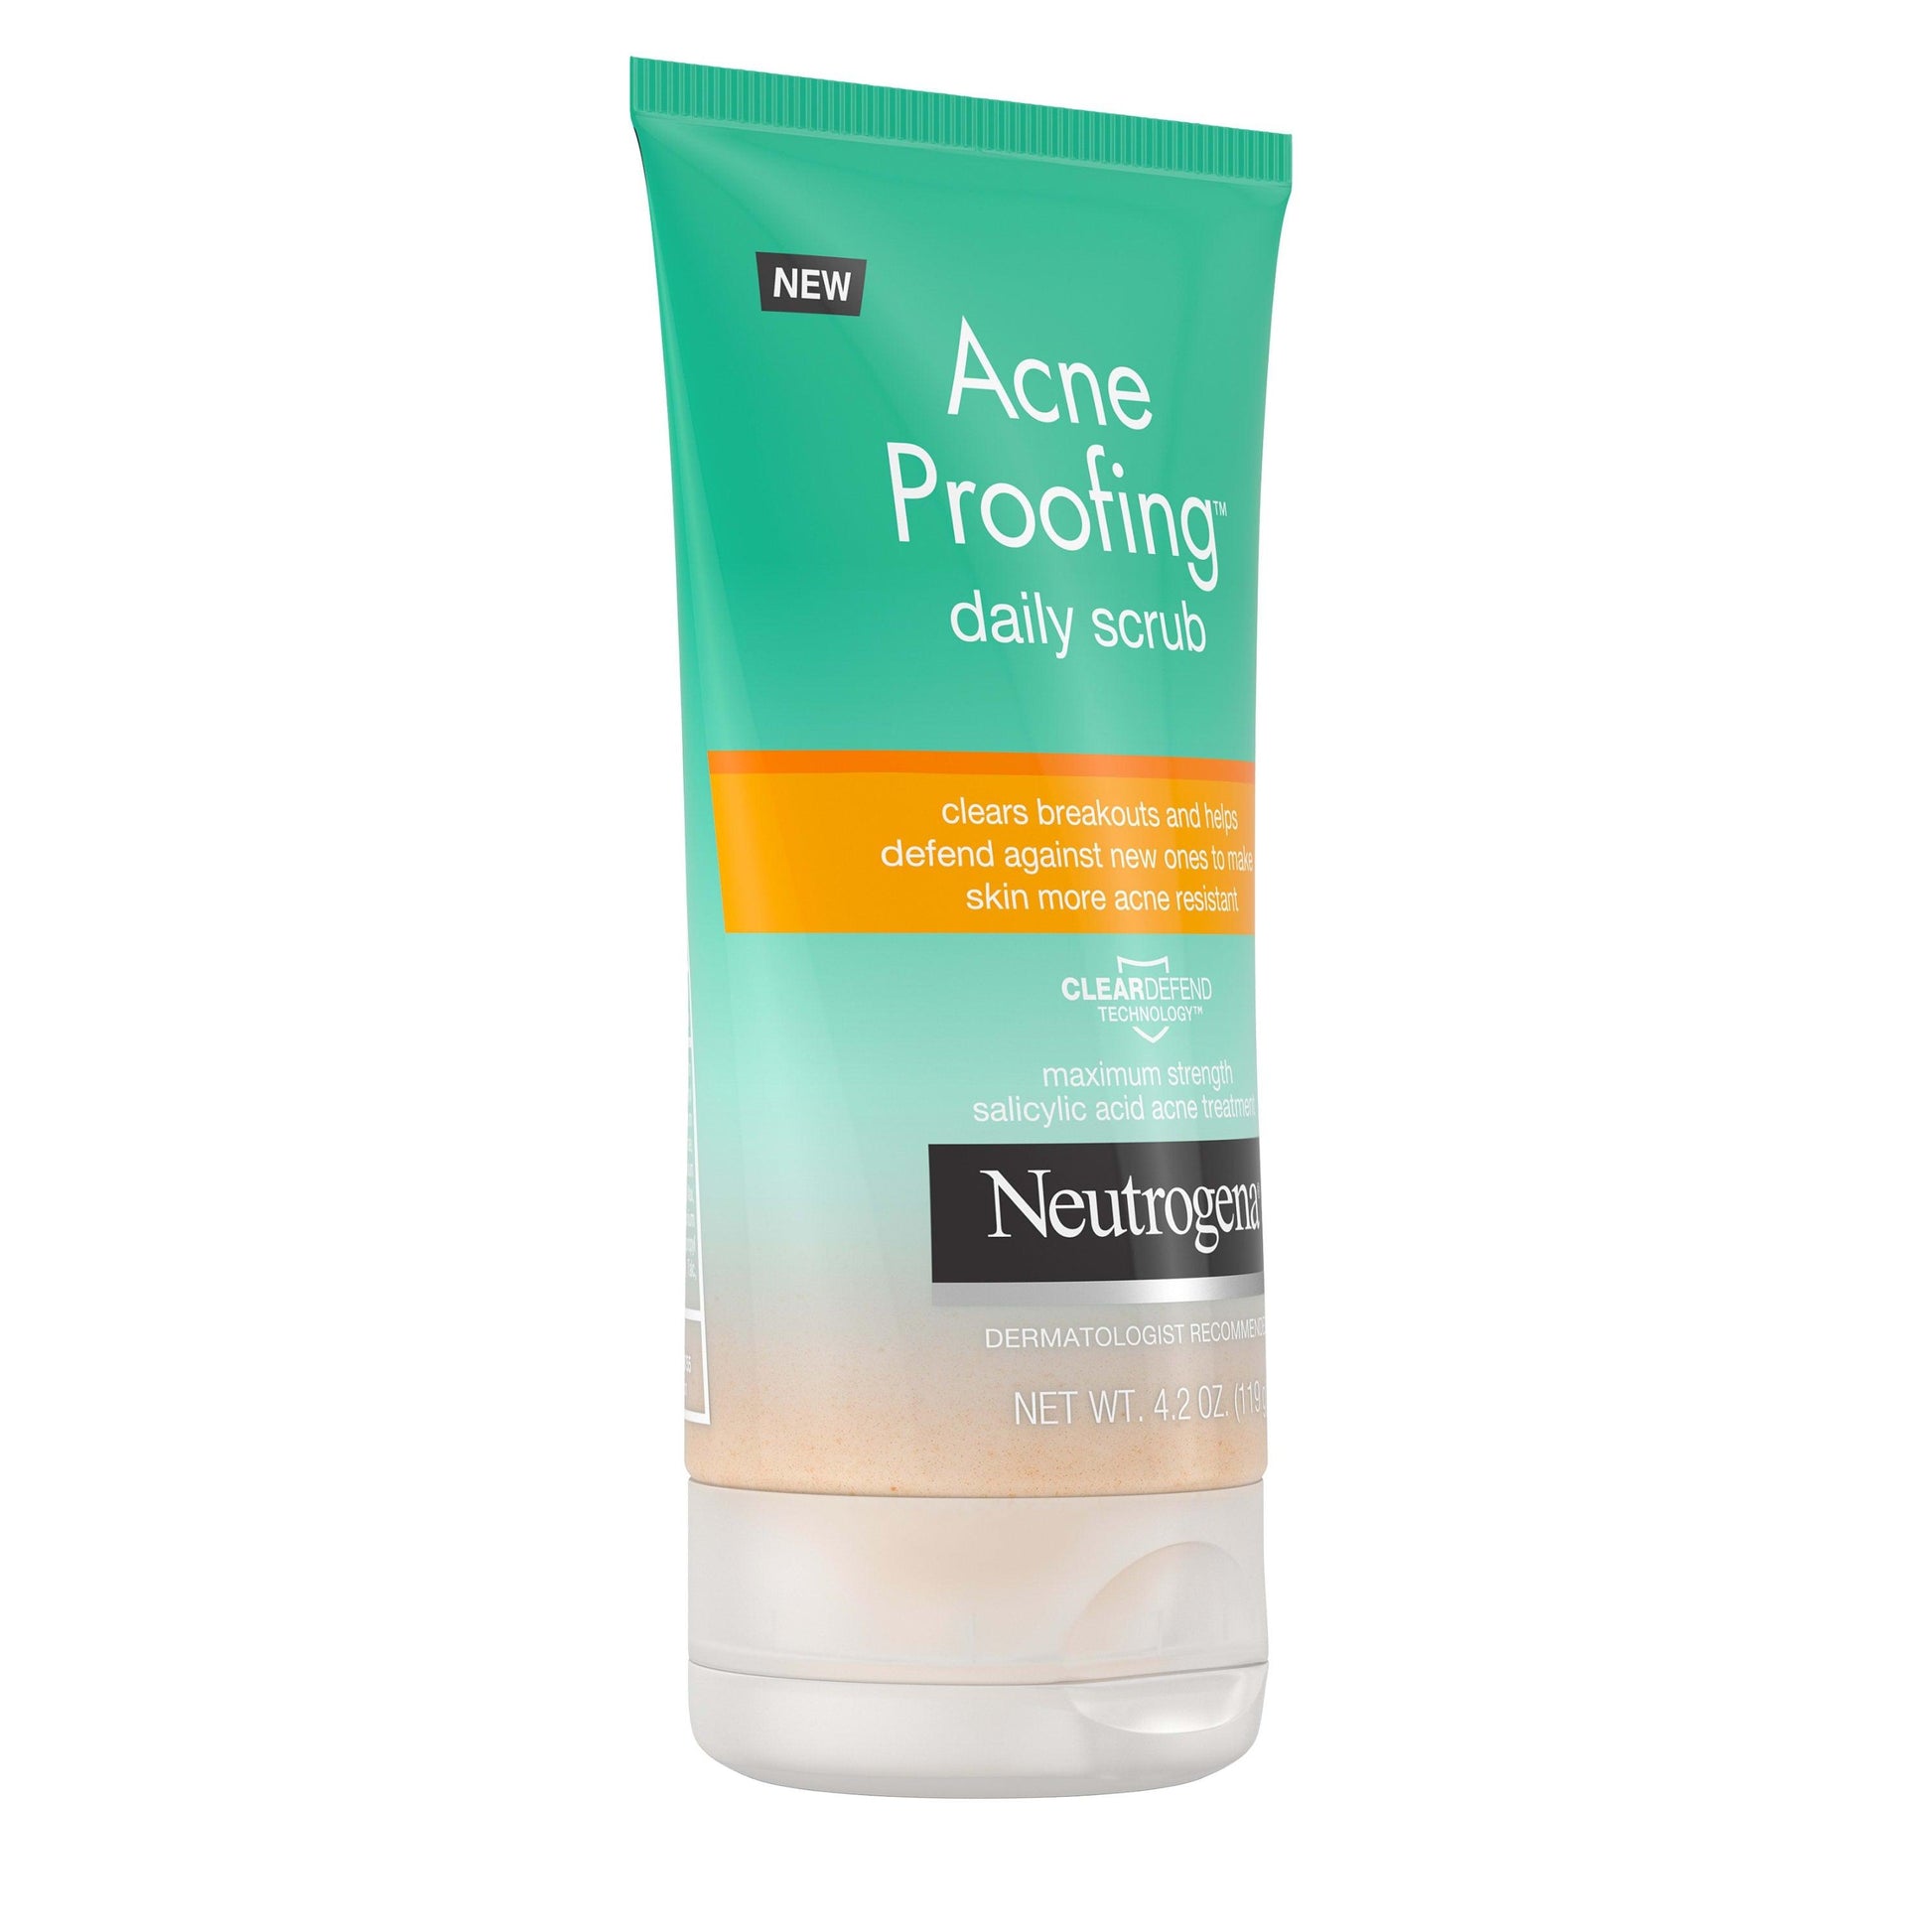 Neutrogena Acne Proofing Exfoliating Facial Scrub, 4.2 oz - asyouwish.store